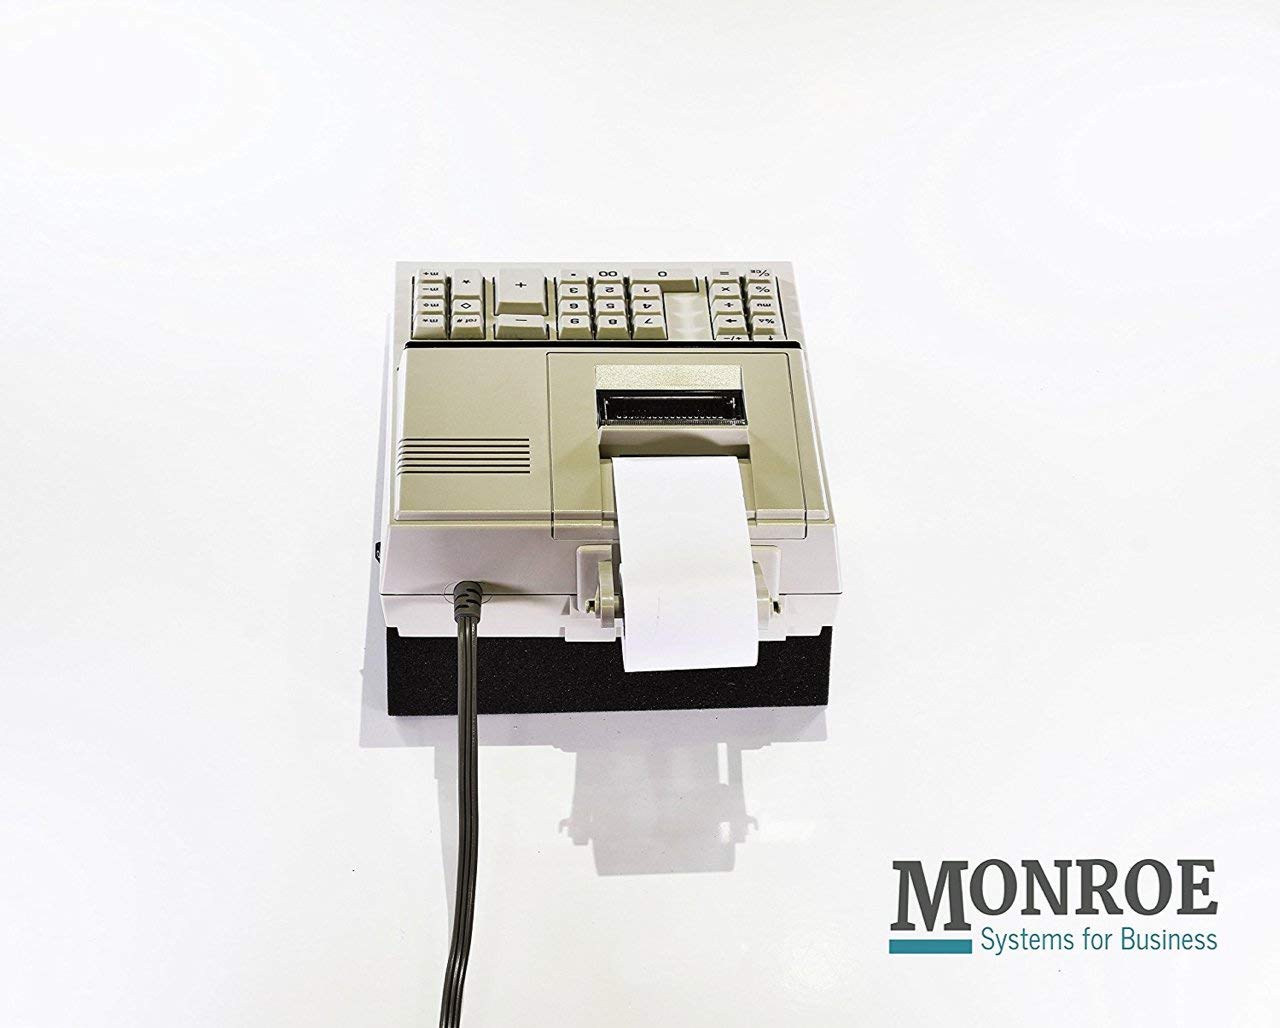 Monroe 122PDX Medium Duty Printing Calculator with Extra Large Plus and Minus Keys